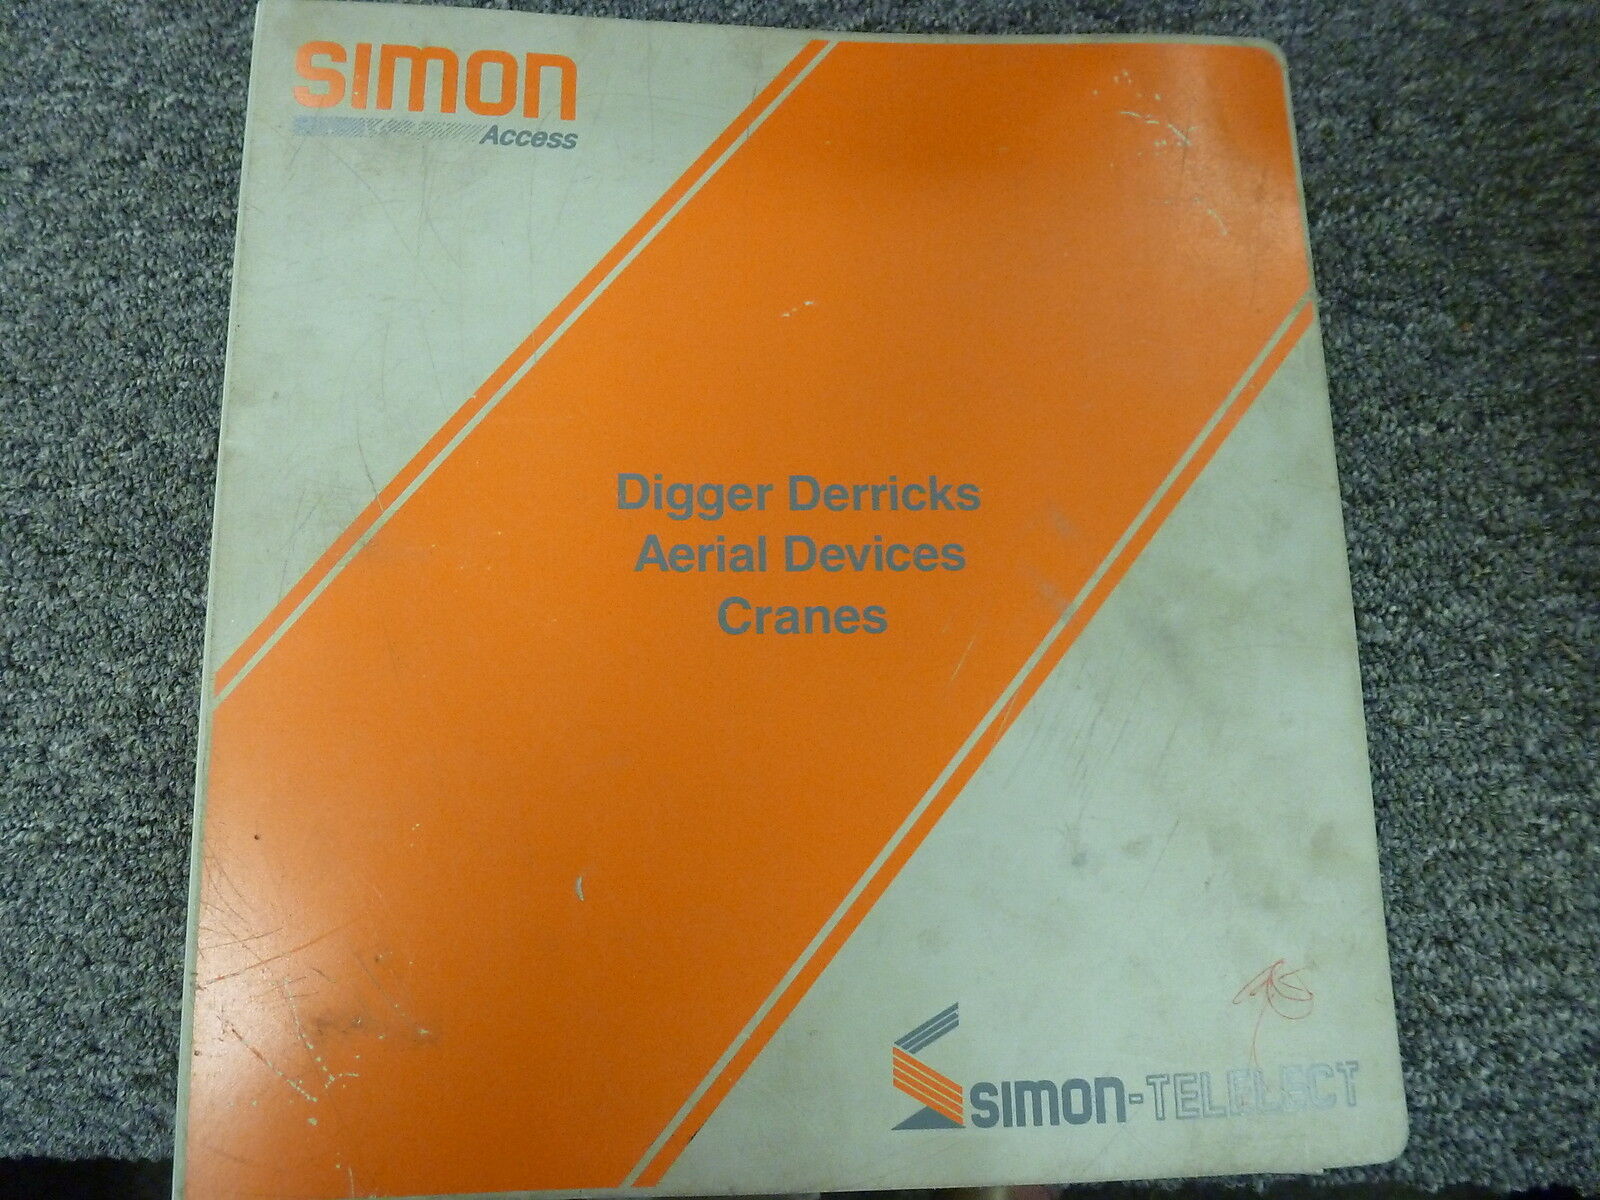 Terex Simon Telelect C5050 Digger Derrick Shop Service Maintenance Manual Book